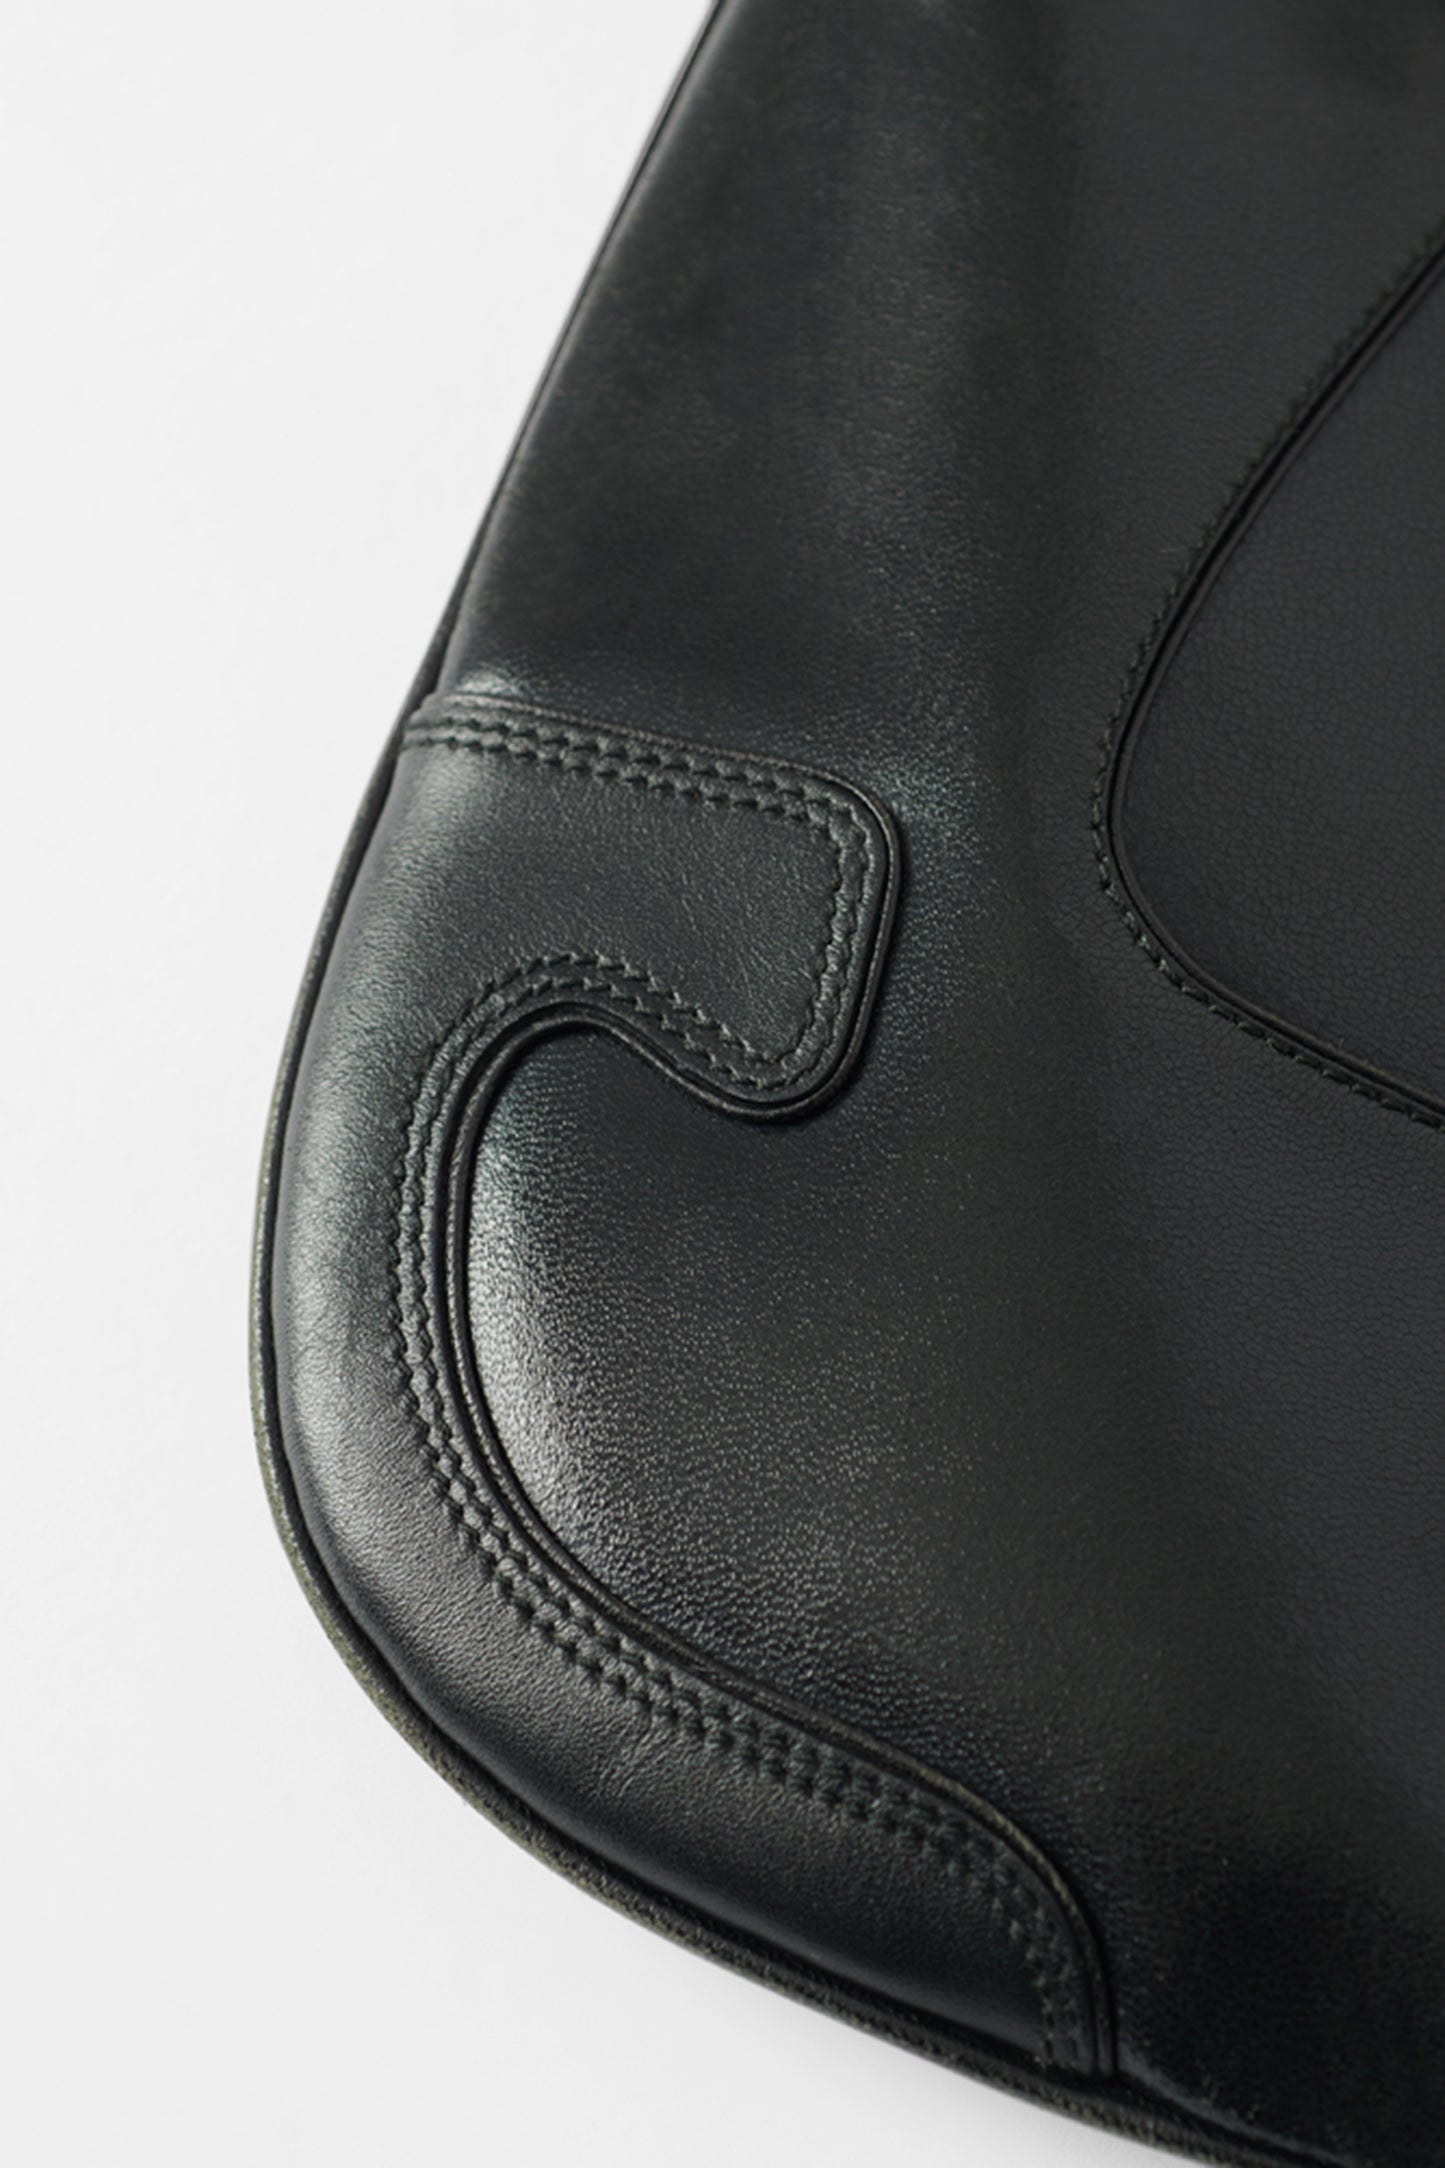 Vintage Black Leather & Neoprene Perforated Bag